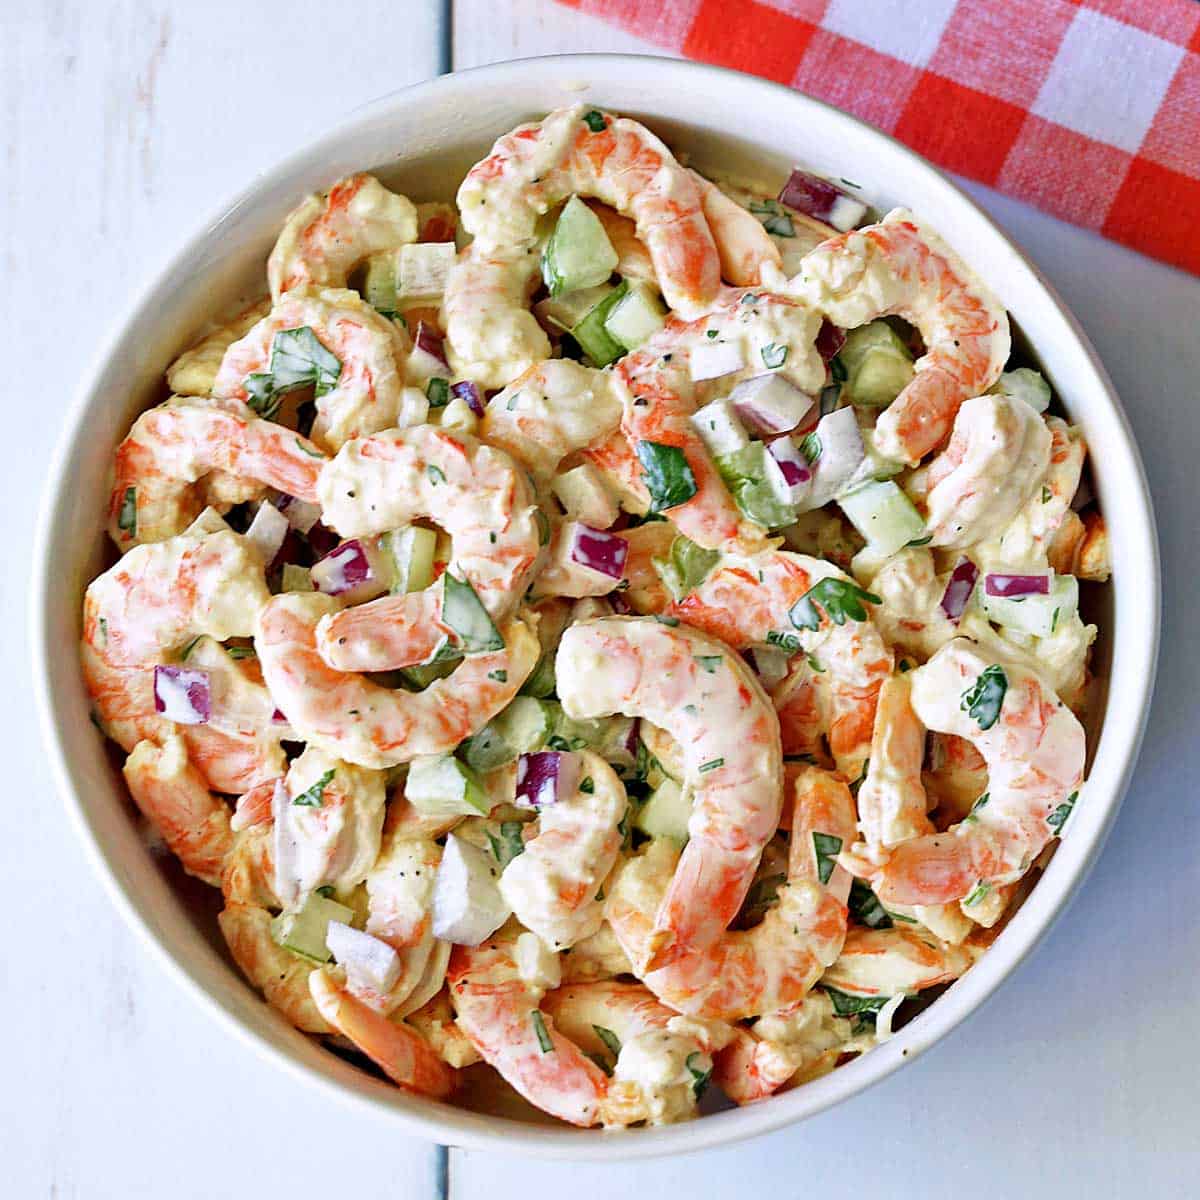 https://healthyrecipesblogs.com/wp-content/uploads/2012/06/shrimp-salad-featured-2022.jpg